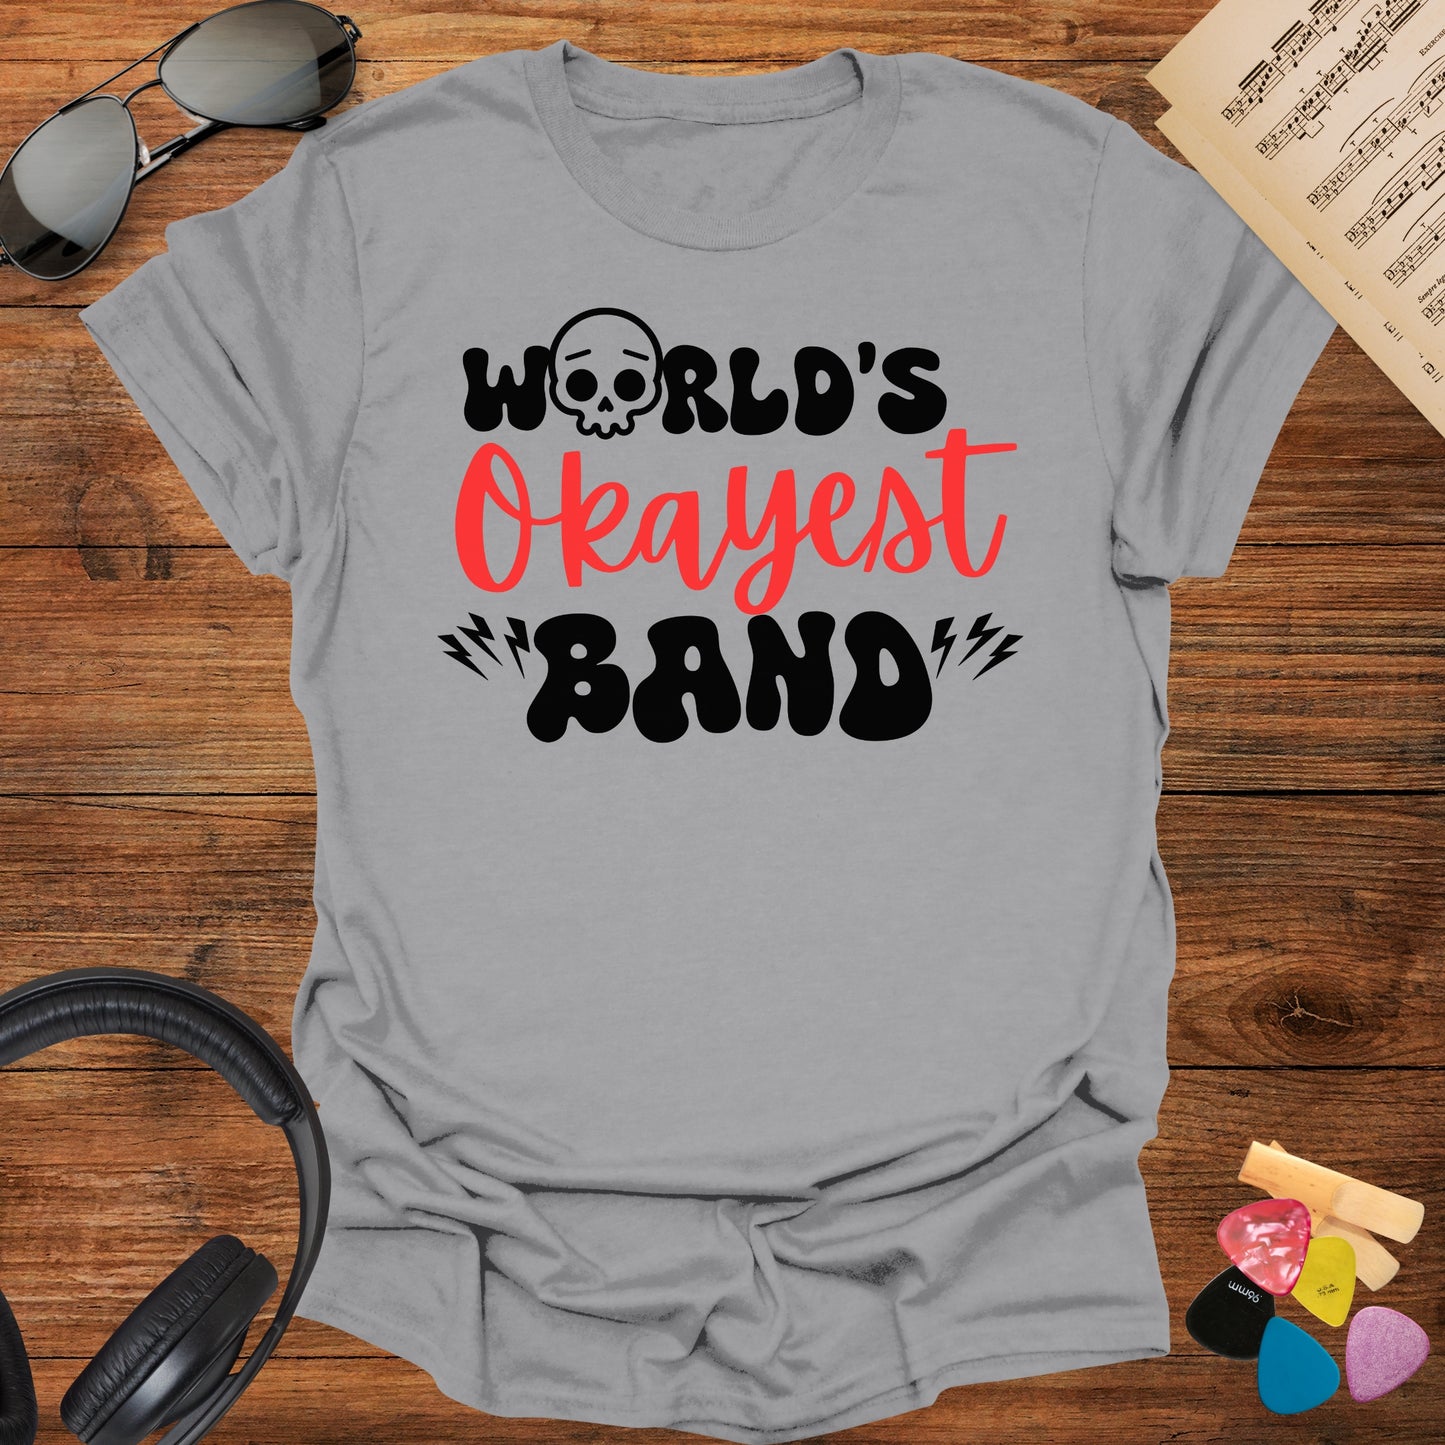 World's "Okayest" Band T-Shirt